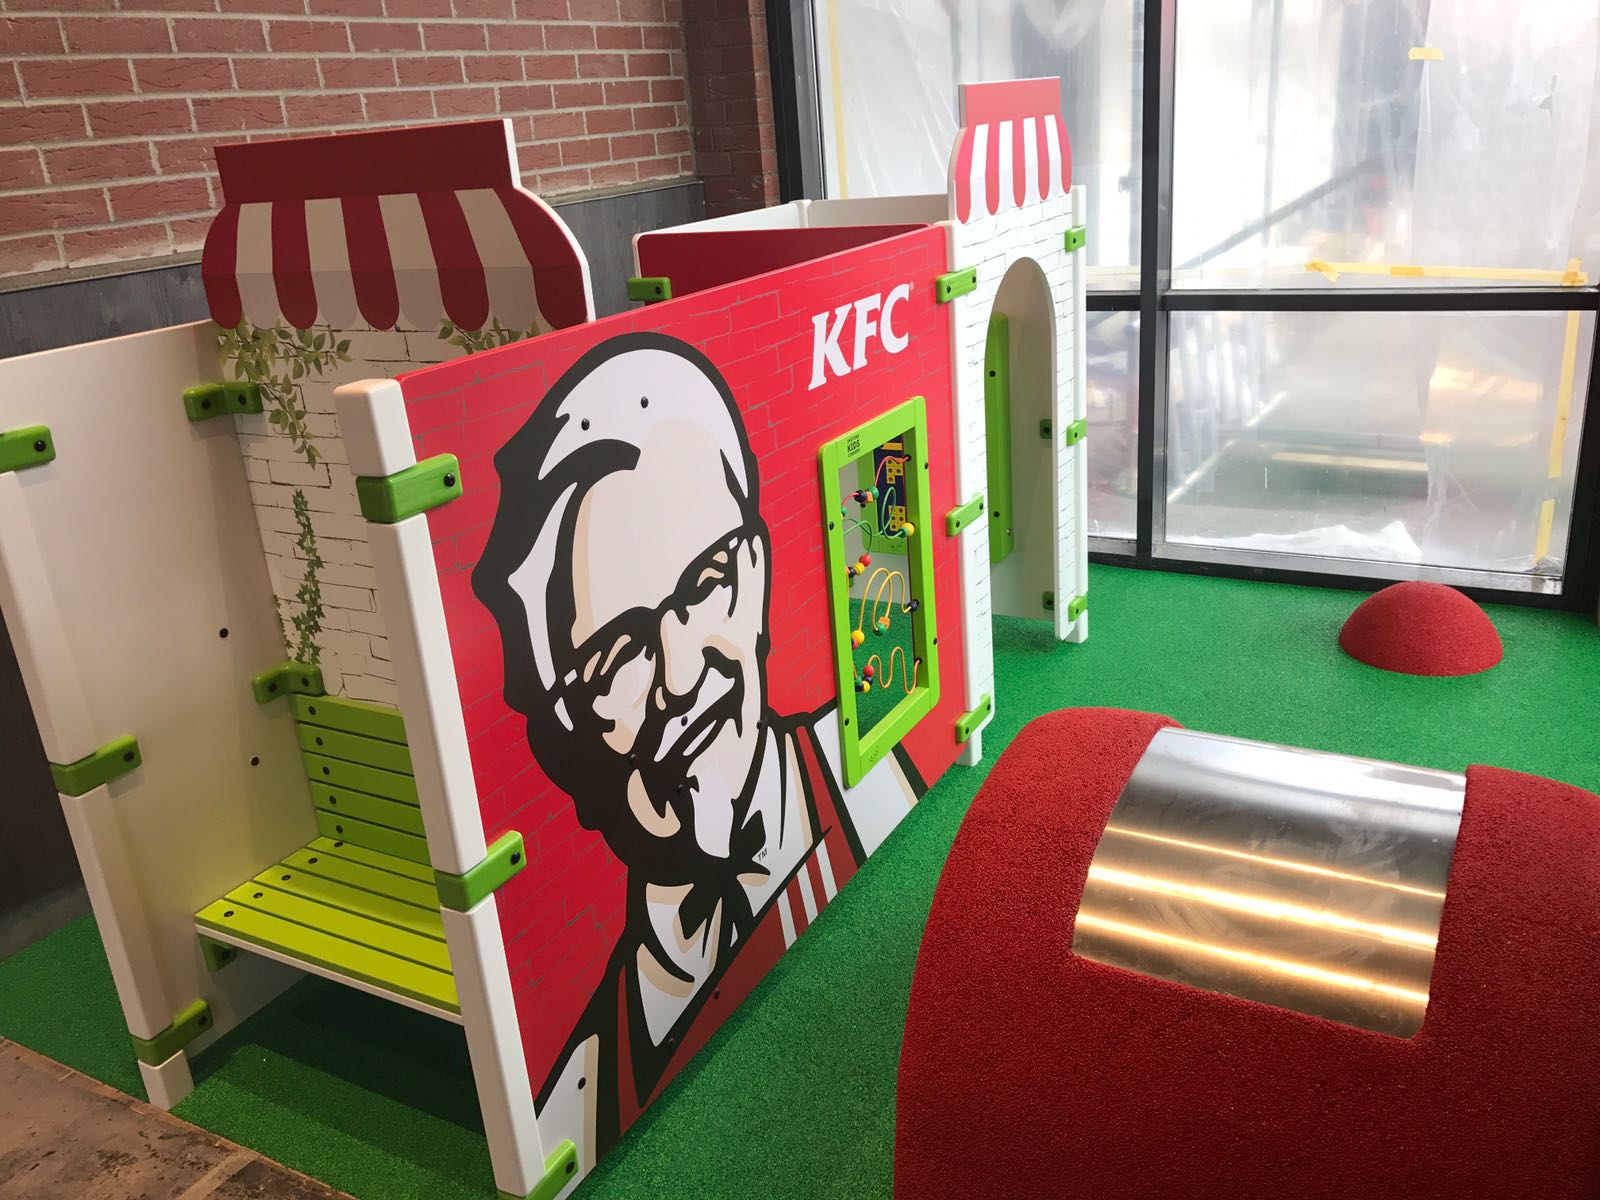 KFC speelsysteem in restaurant